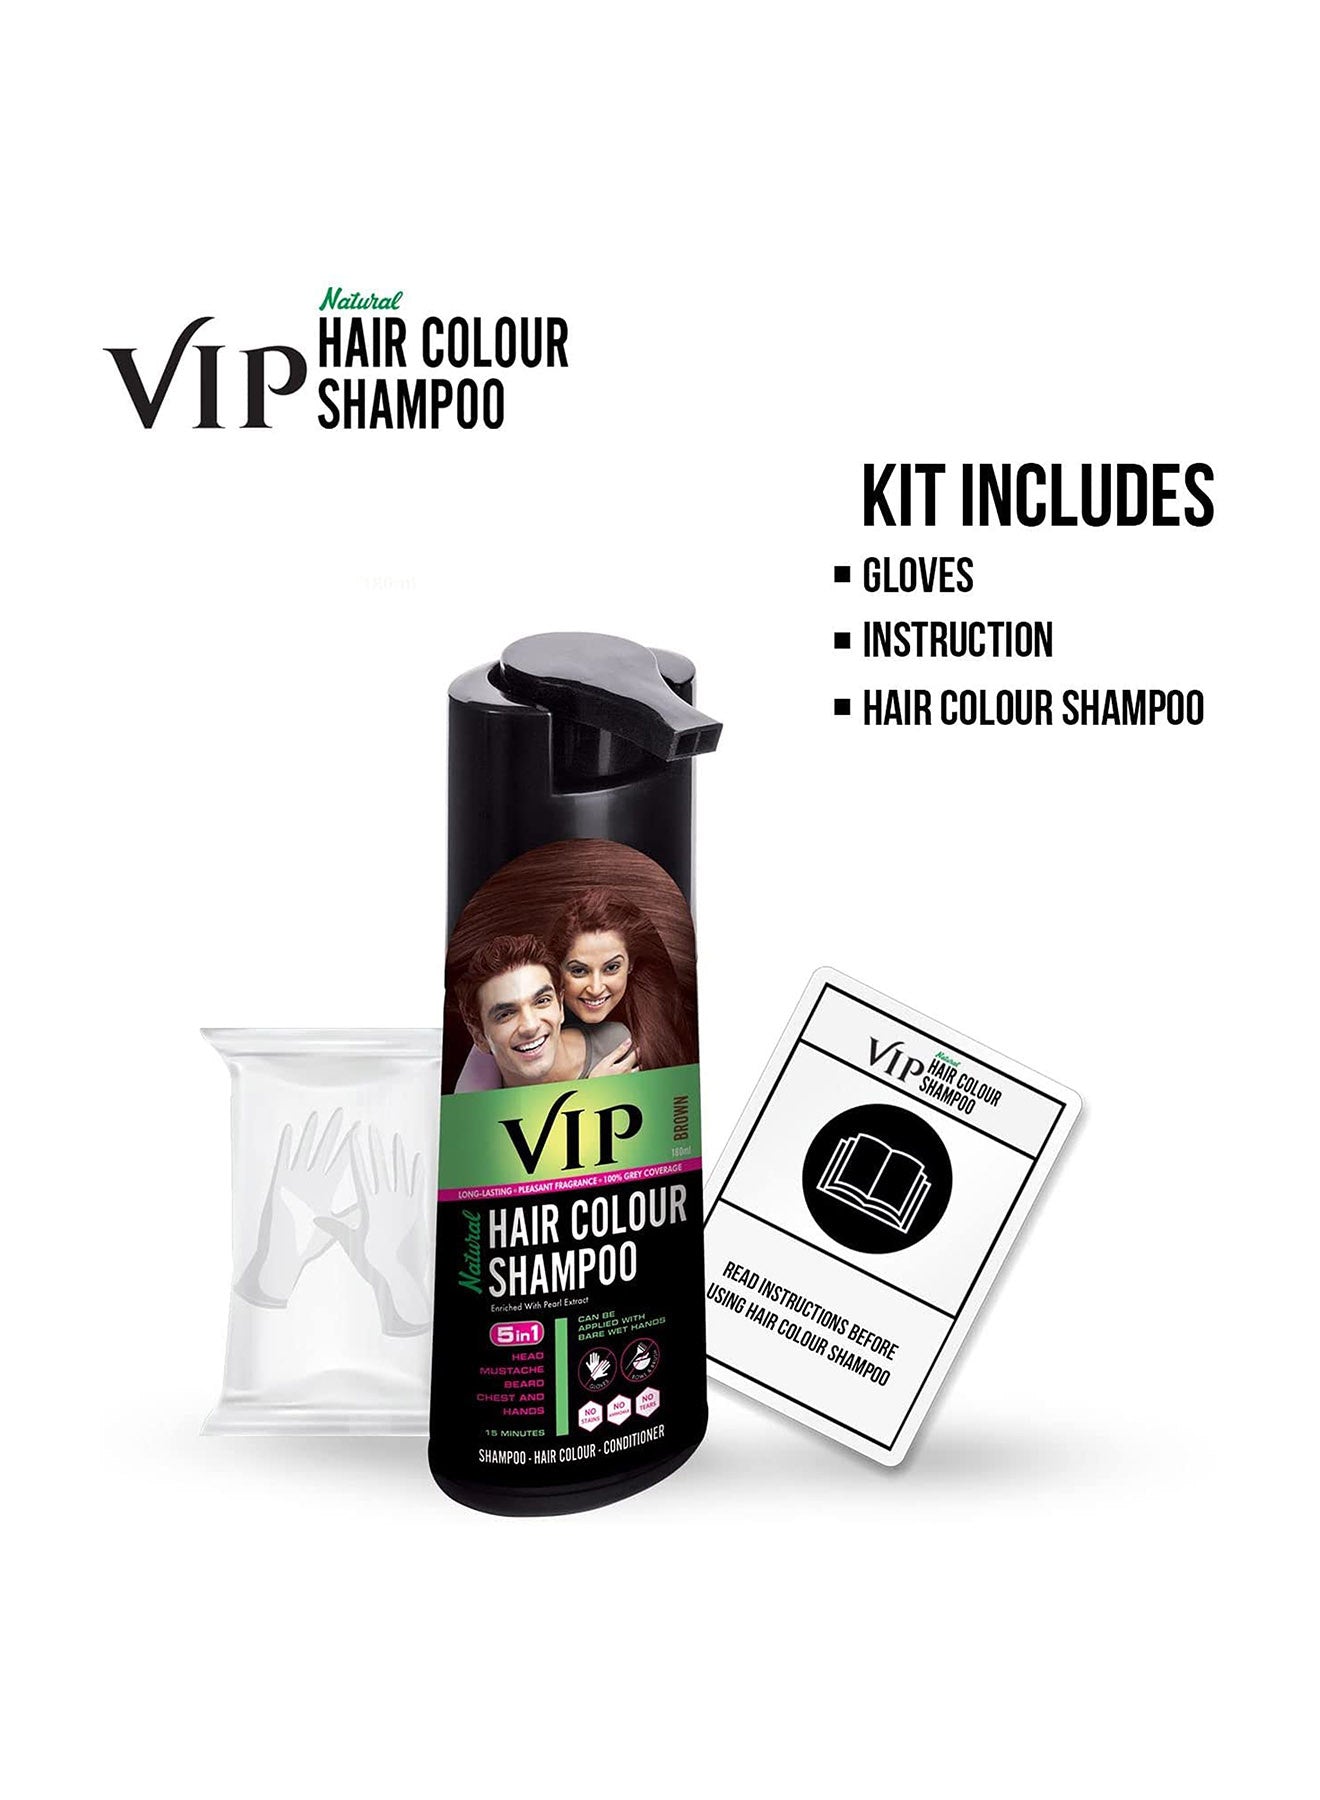 VIP Natural Hair Color Shampoo Brown 180ml